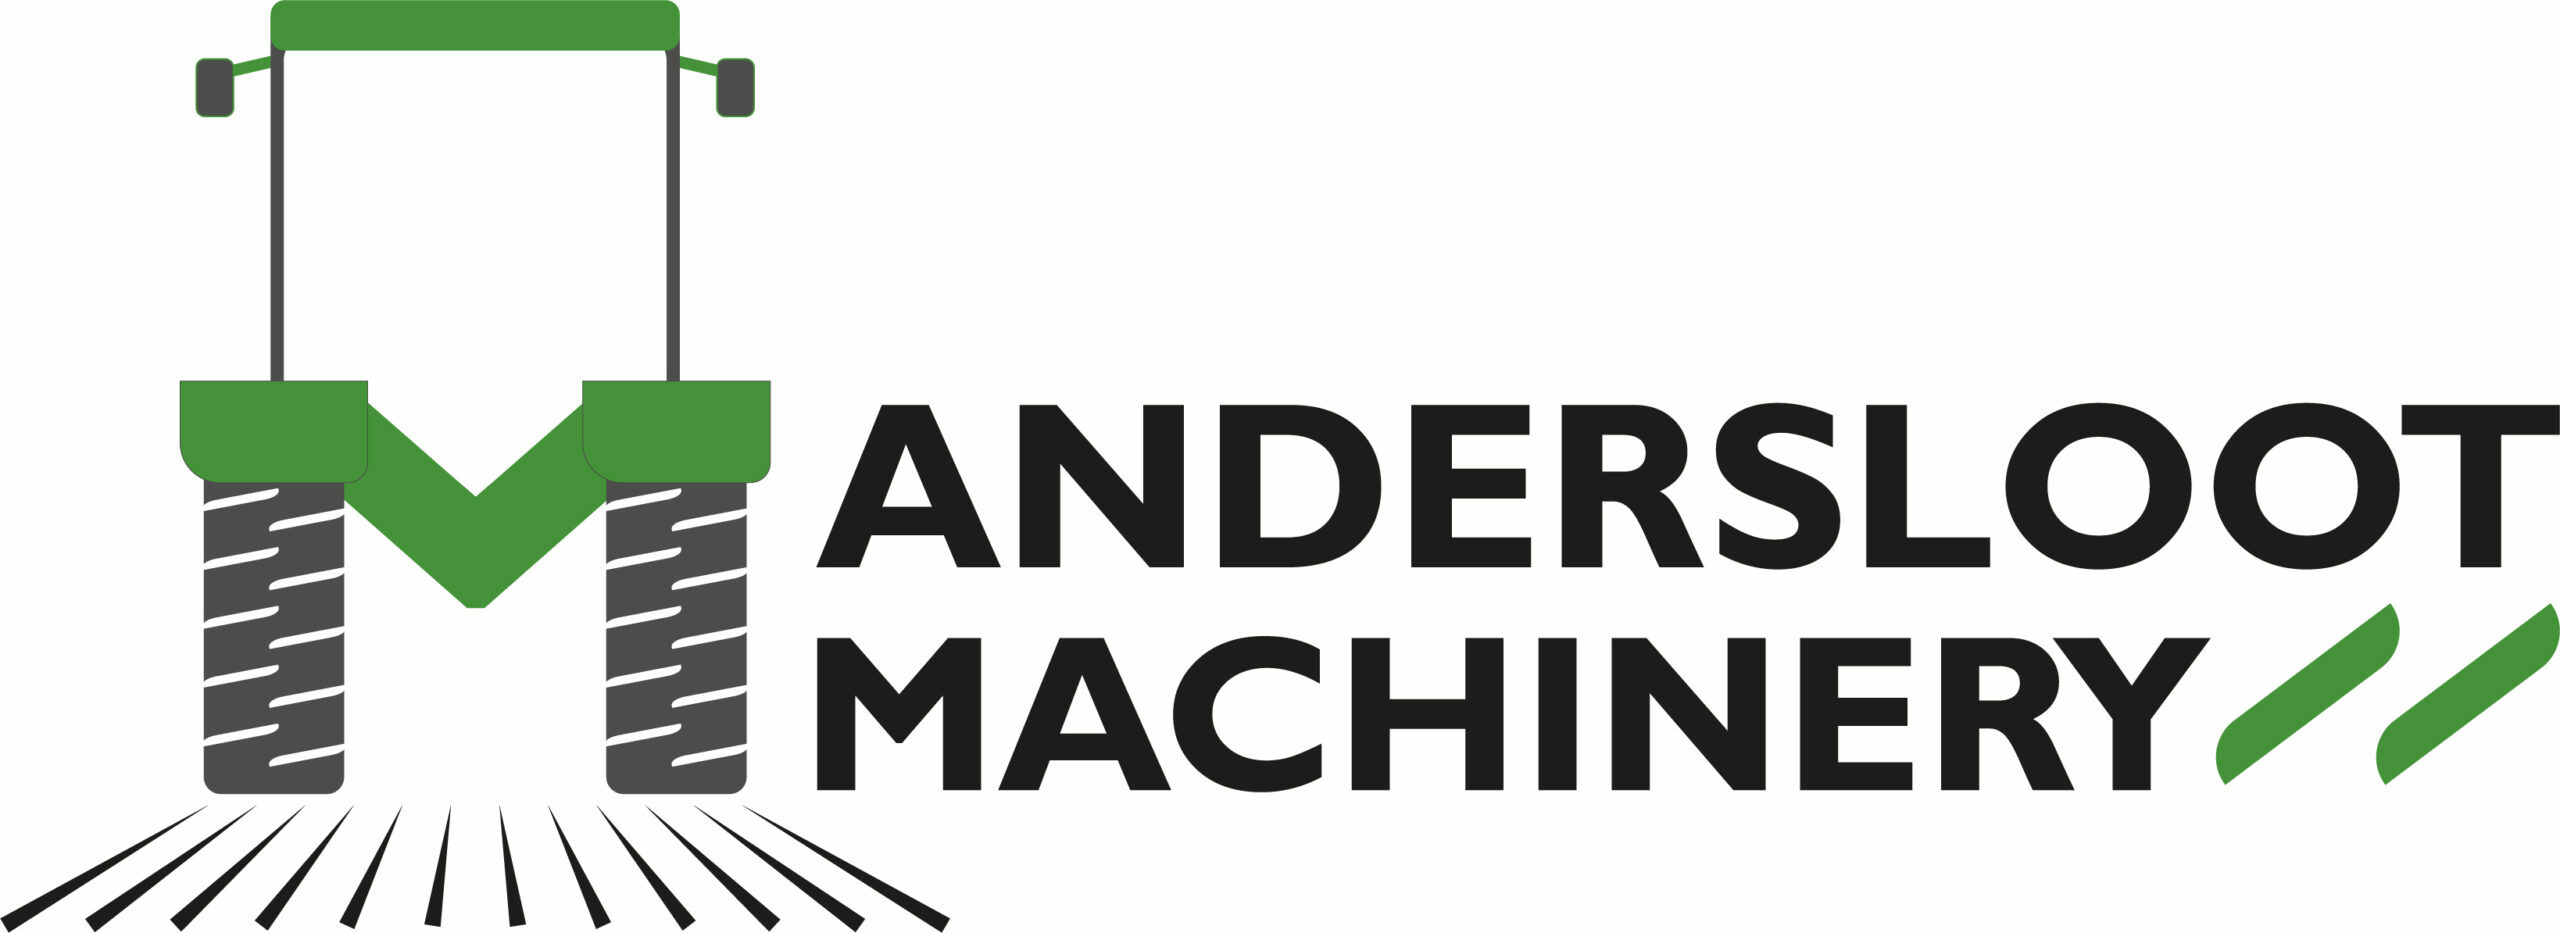 Mandersloot Machinery